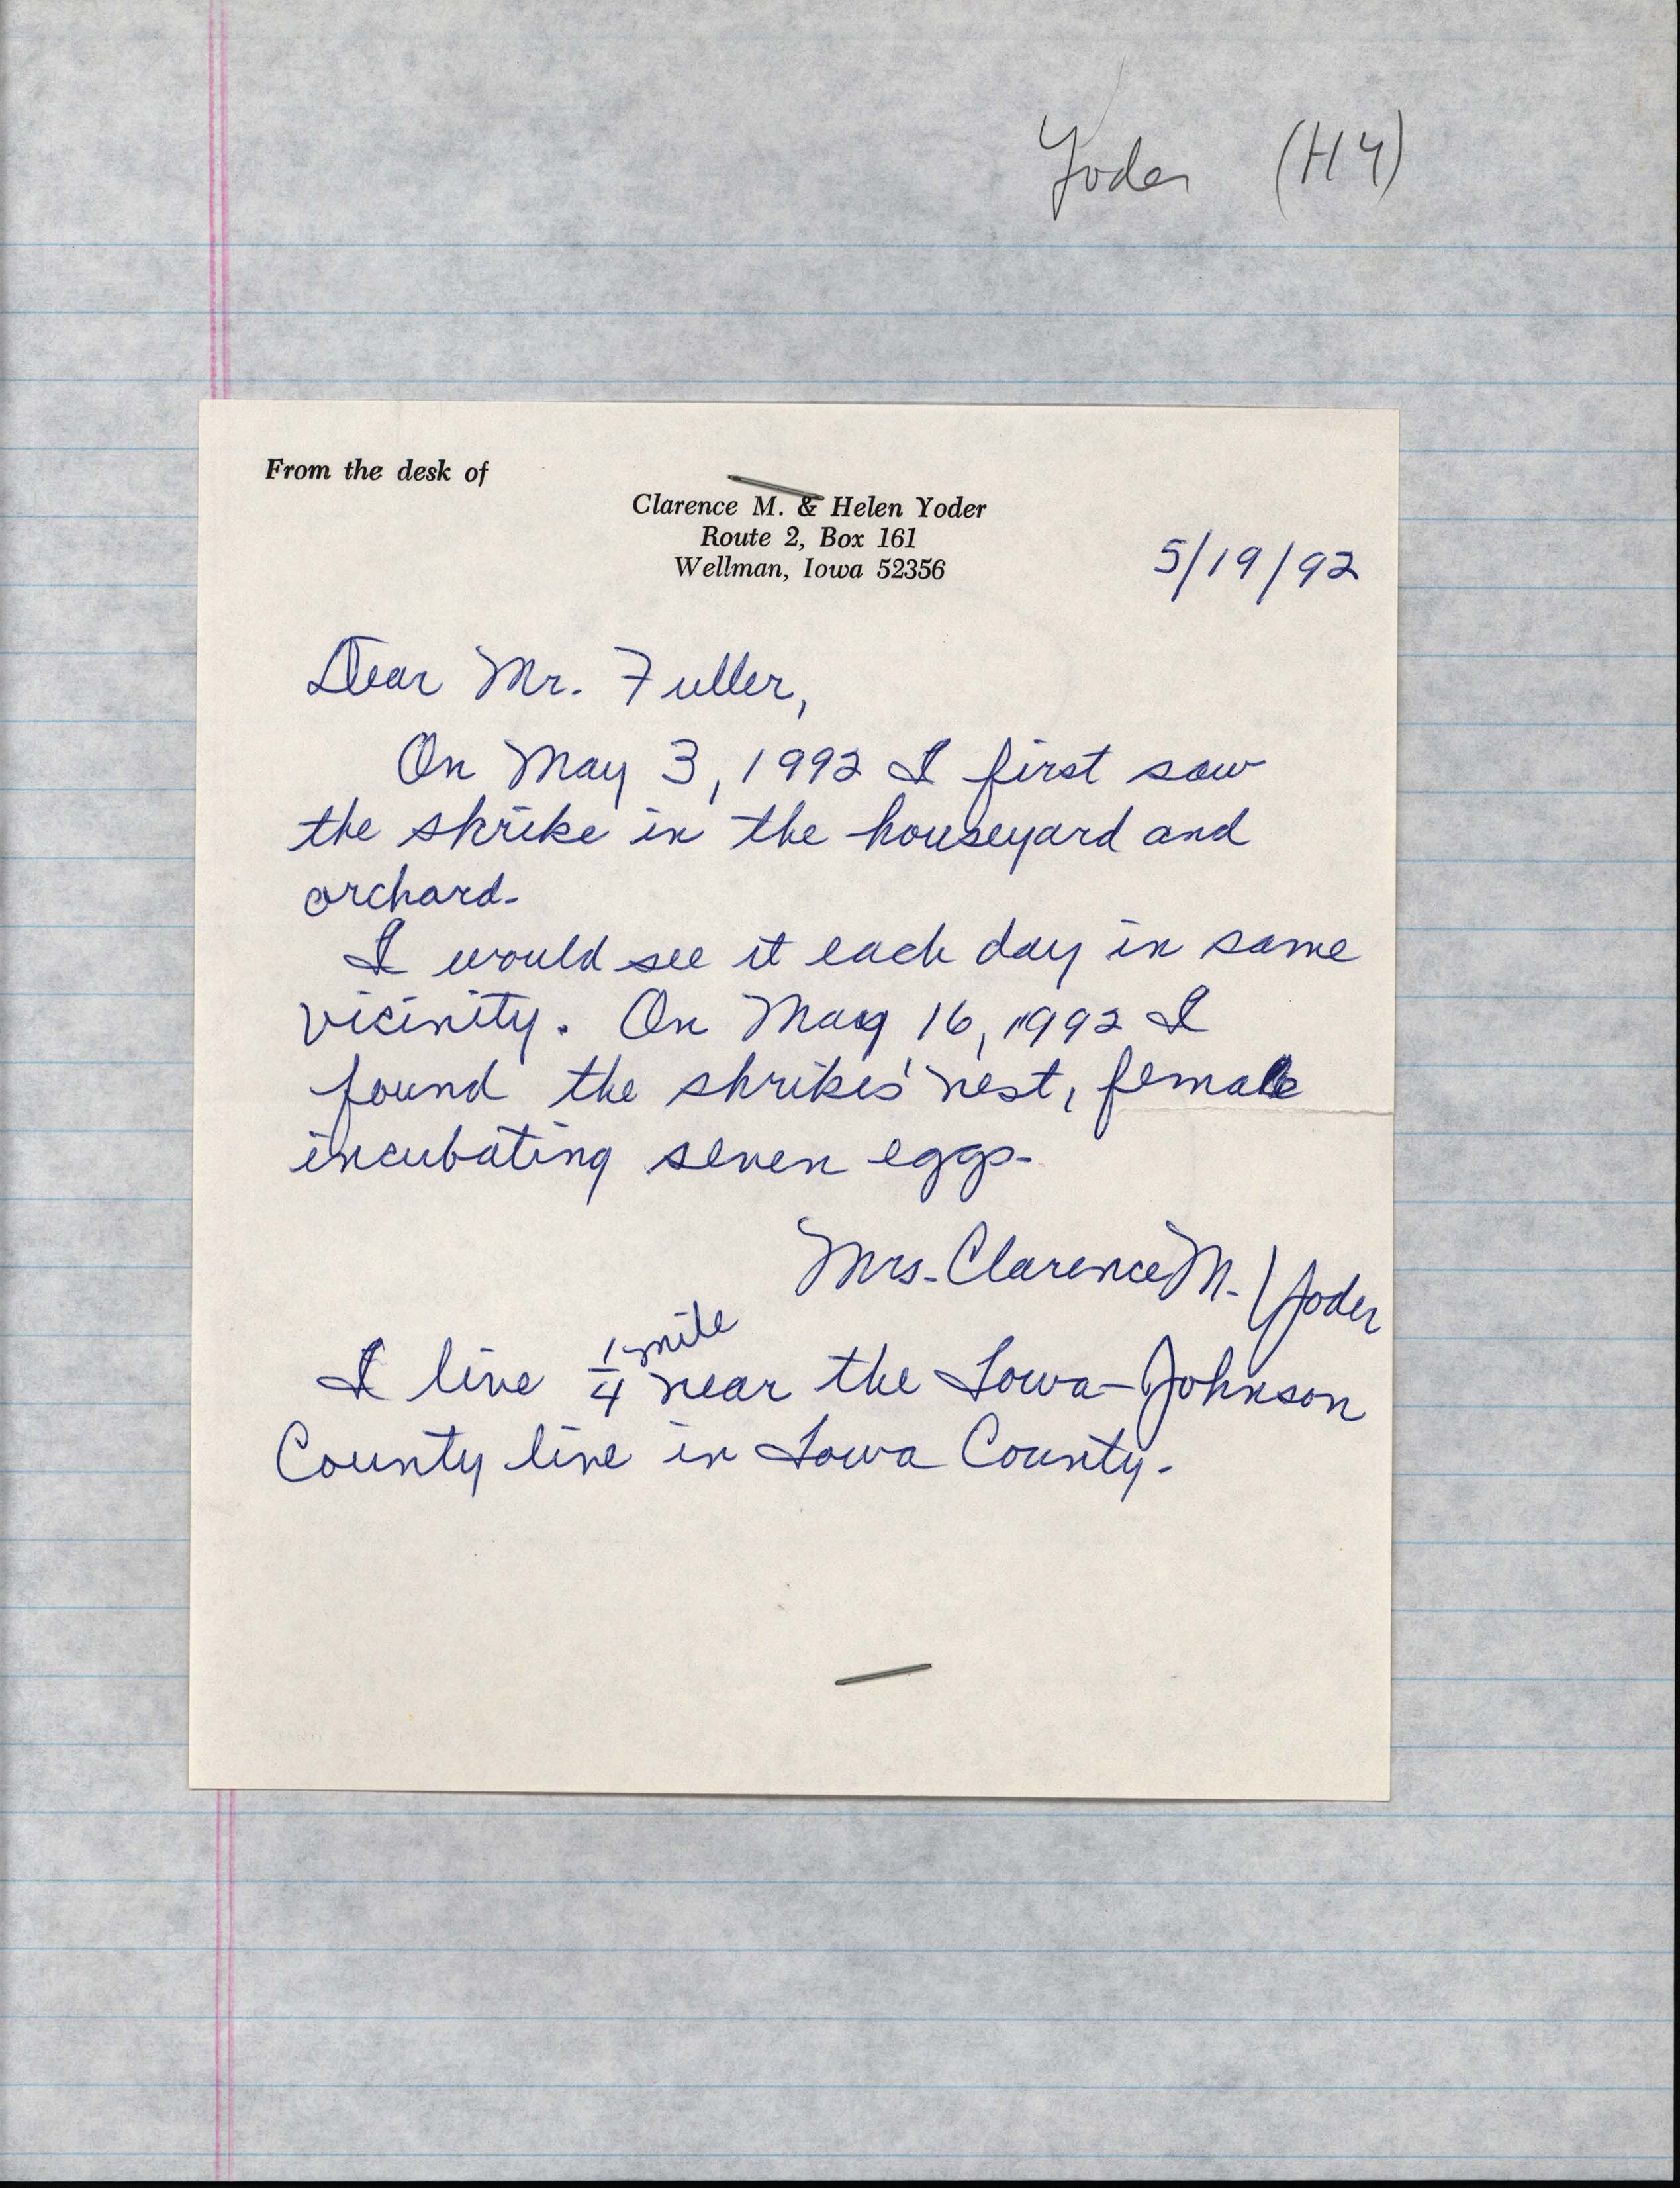 Helen Yoder letter to James L. Fuller regarding a Loggerhead Shrike sighting, May 19, 1992